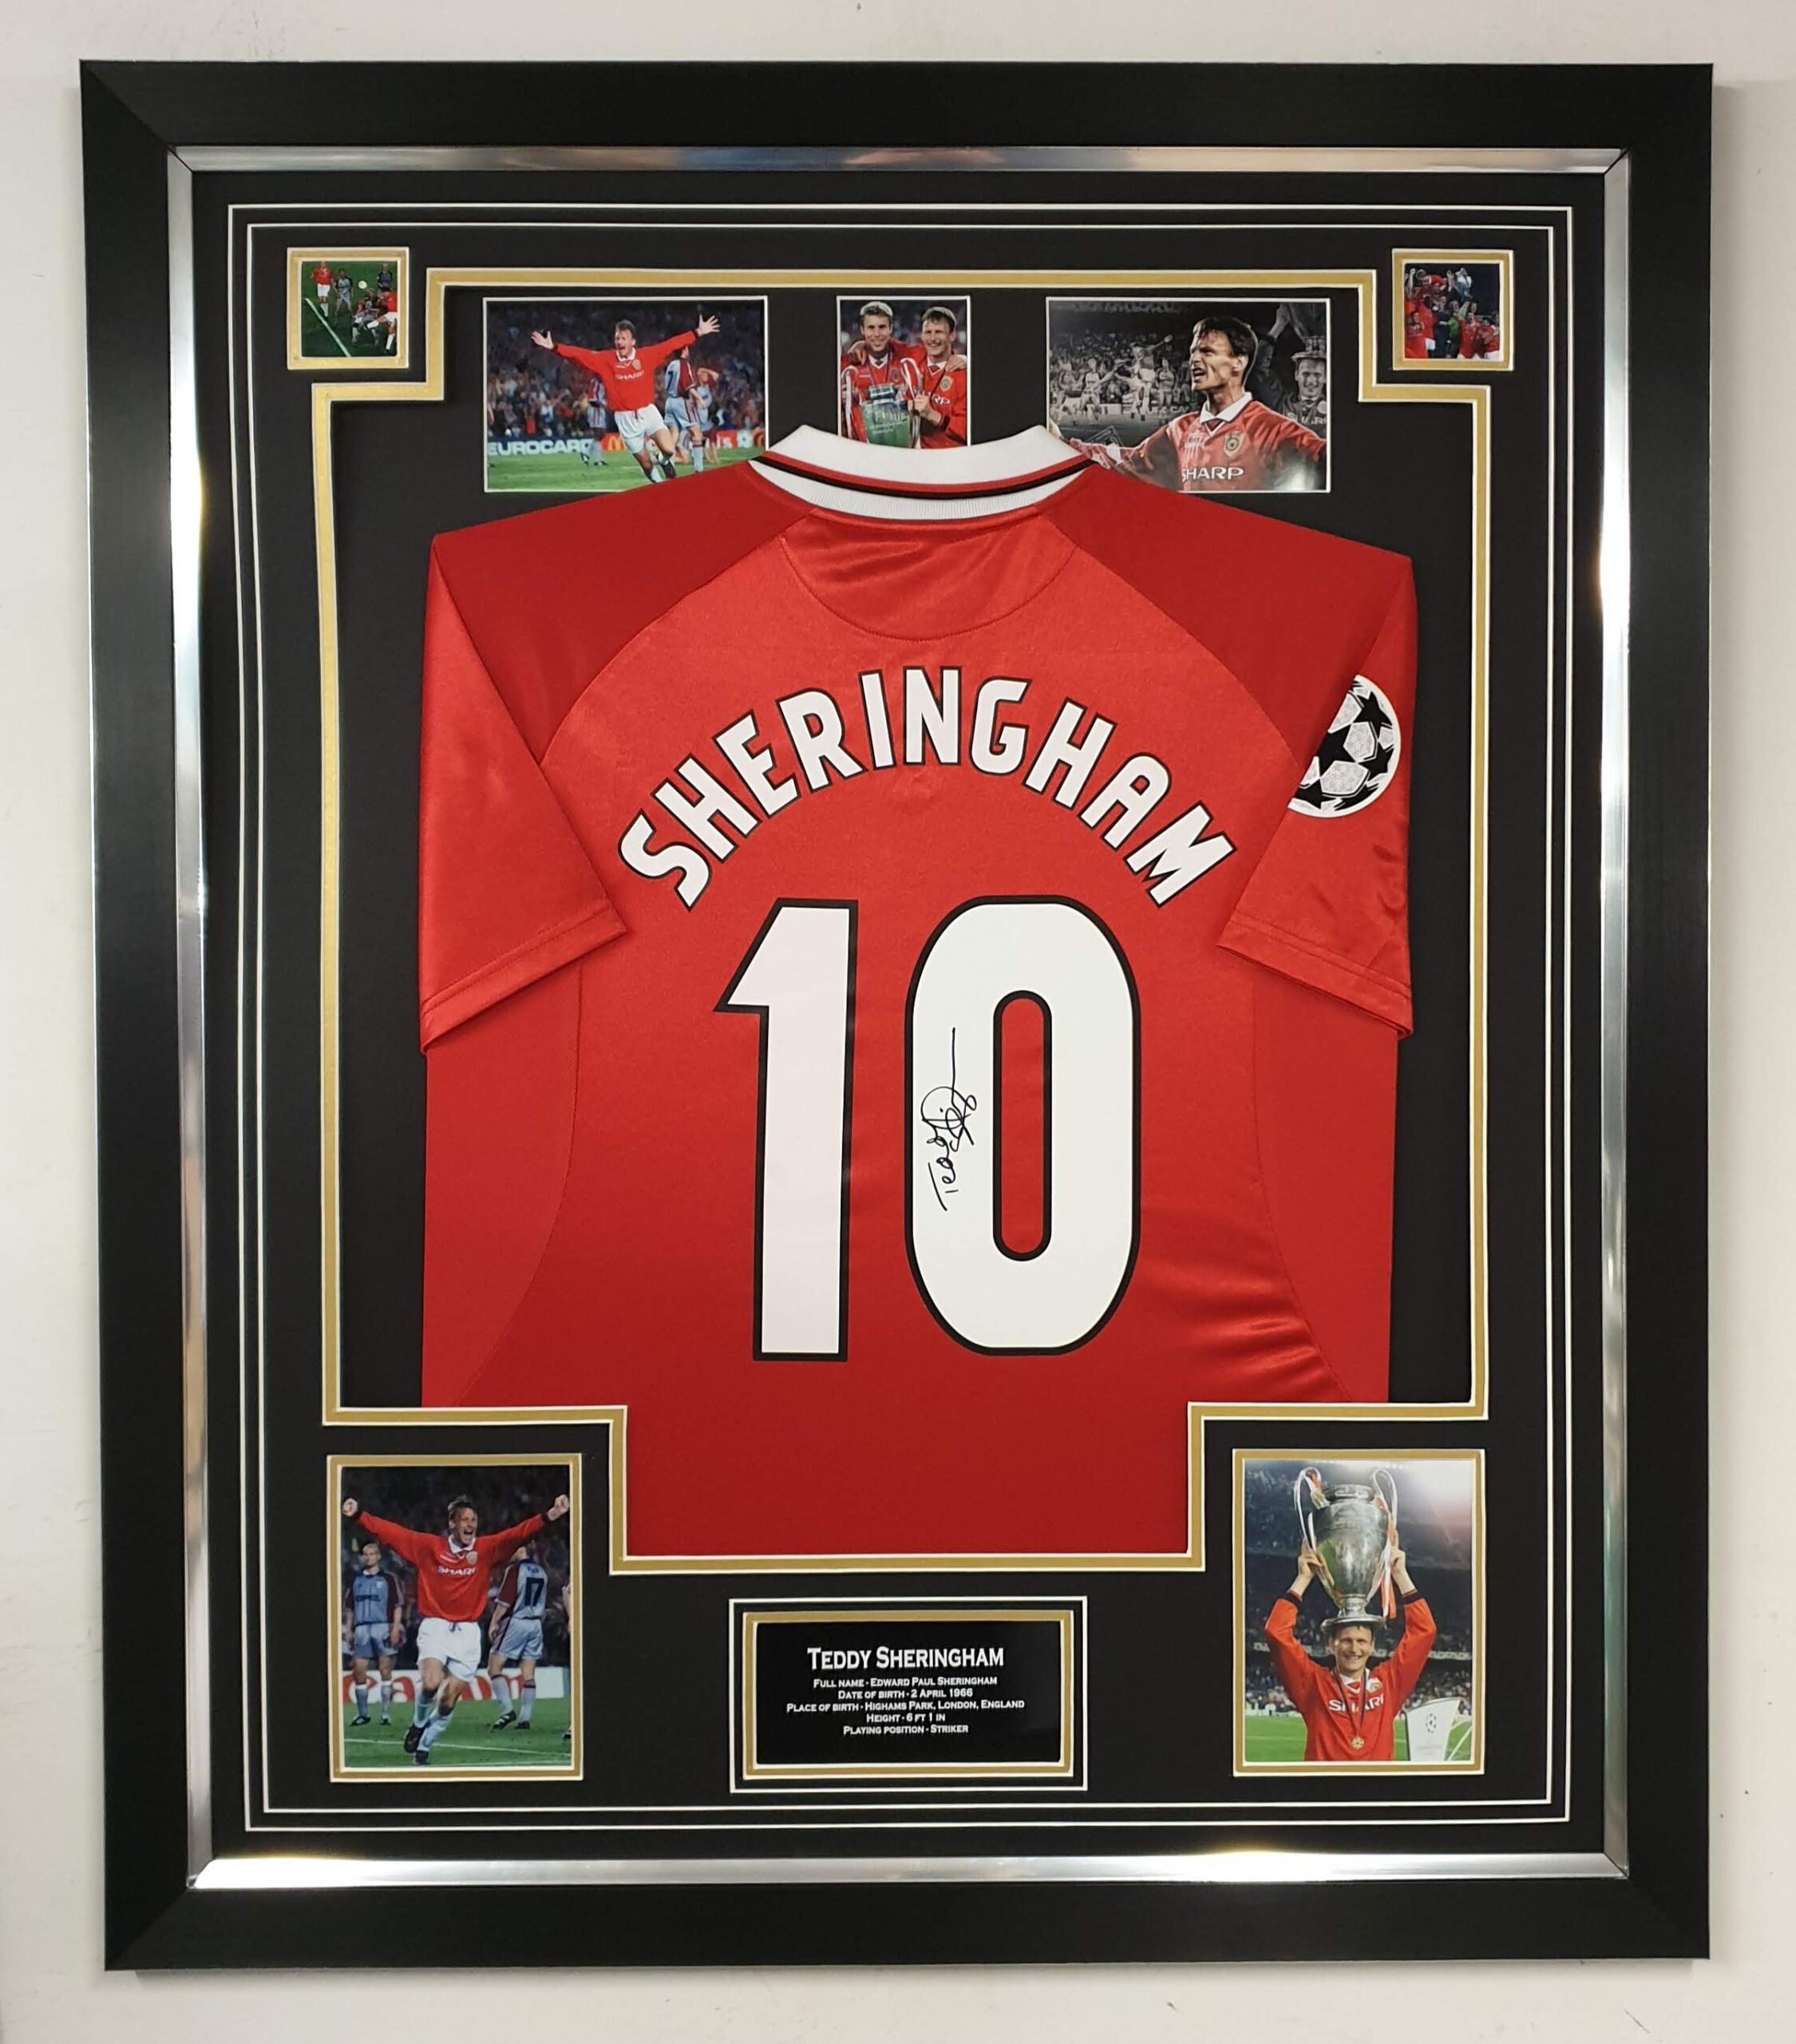 Teddy Sheringham of Manchester United Shirt - Signed Memorabila Shop